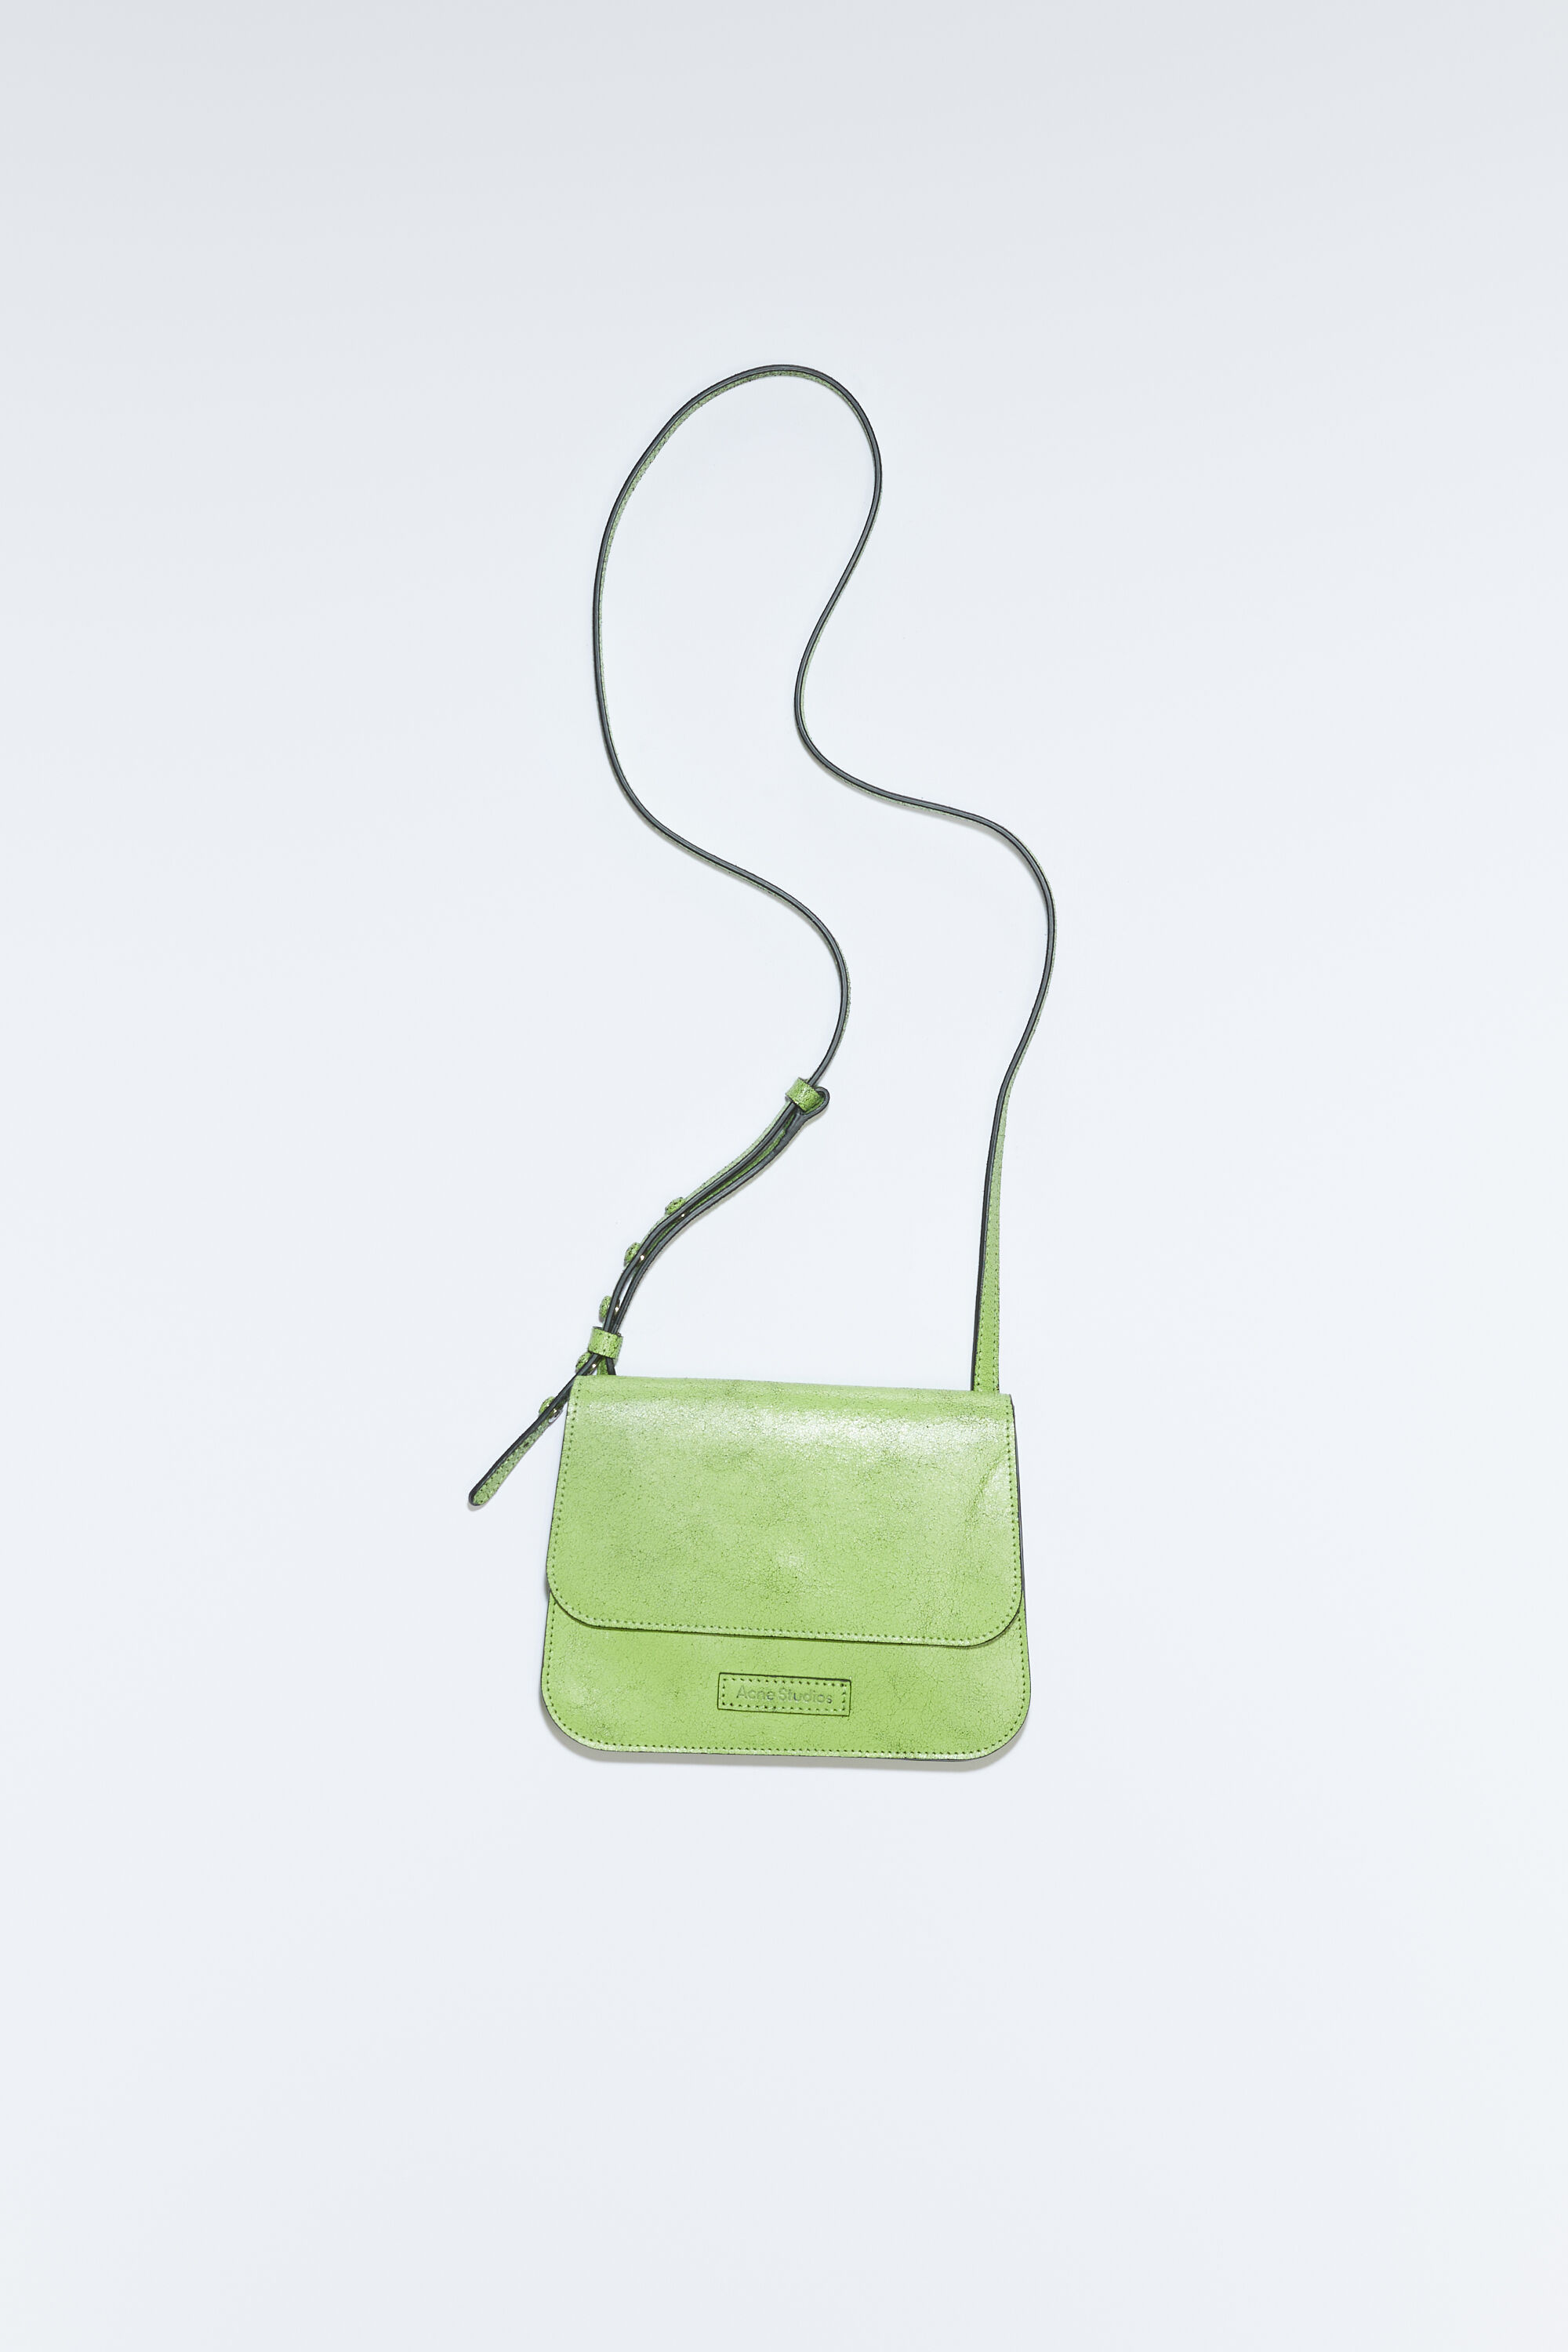 Acne Studios - Platt crossbody bag - Lime green